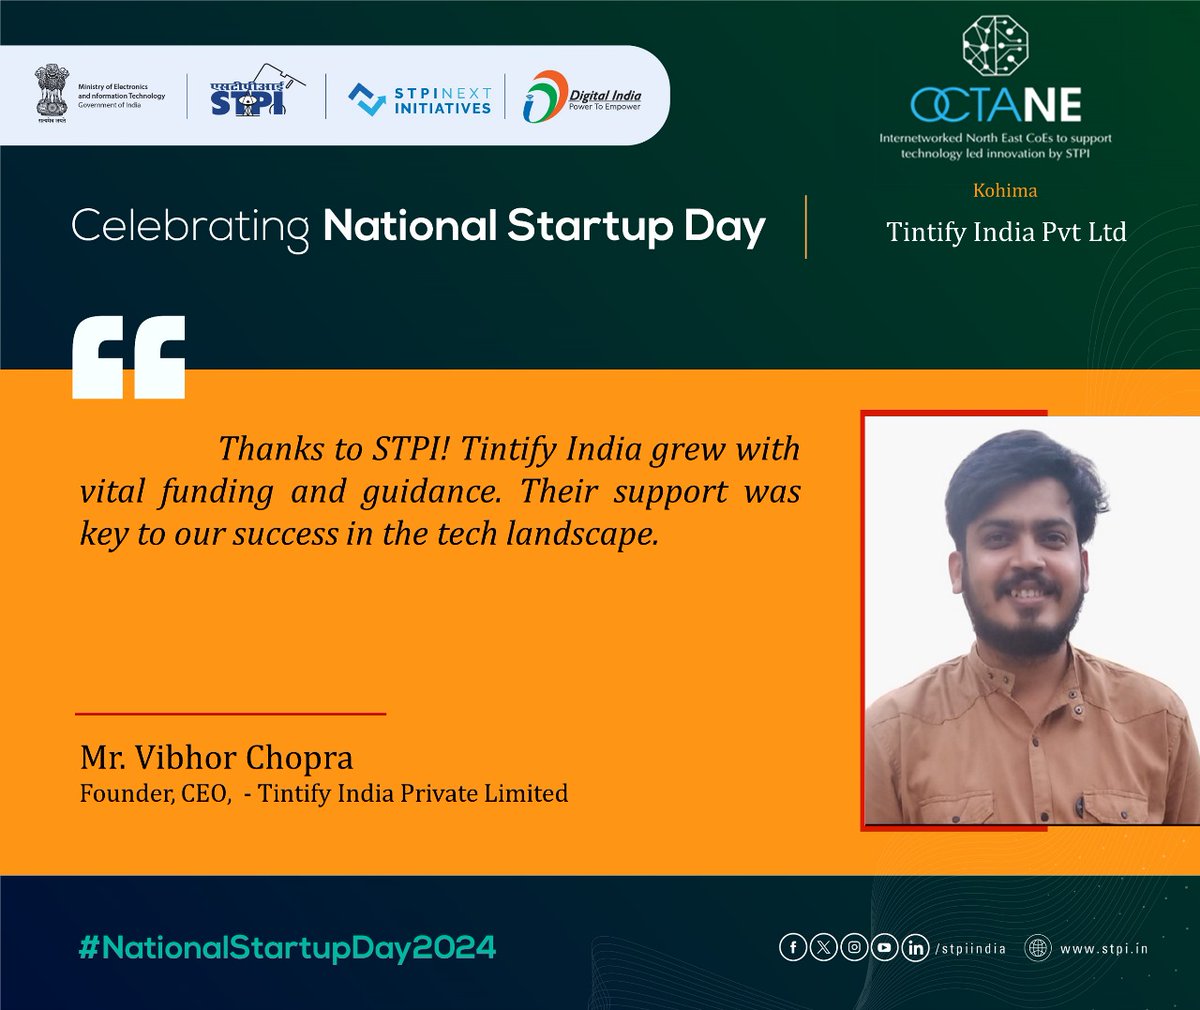 Celebrating the success of #OctaNE CoE #Startup on the occasion of National Startup Day! #NationalStartupDay2024 #TheNextWave #STPIStartupEcosystem @Rajeev_GoI @GoI_MeitY @arvindtw